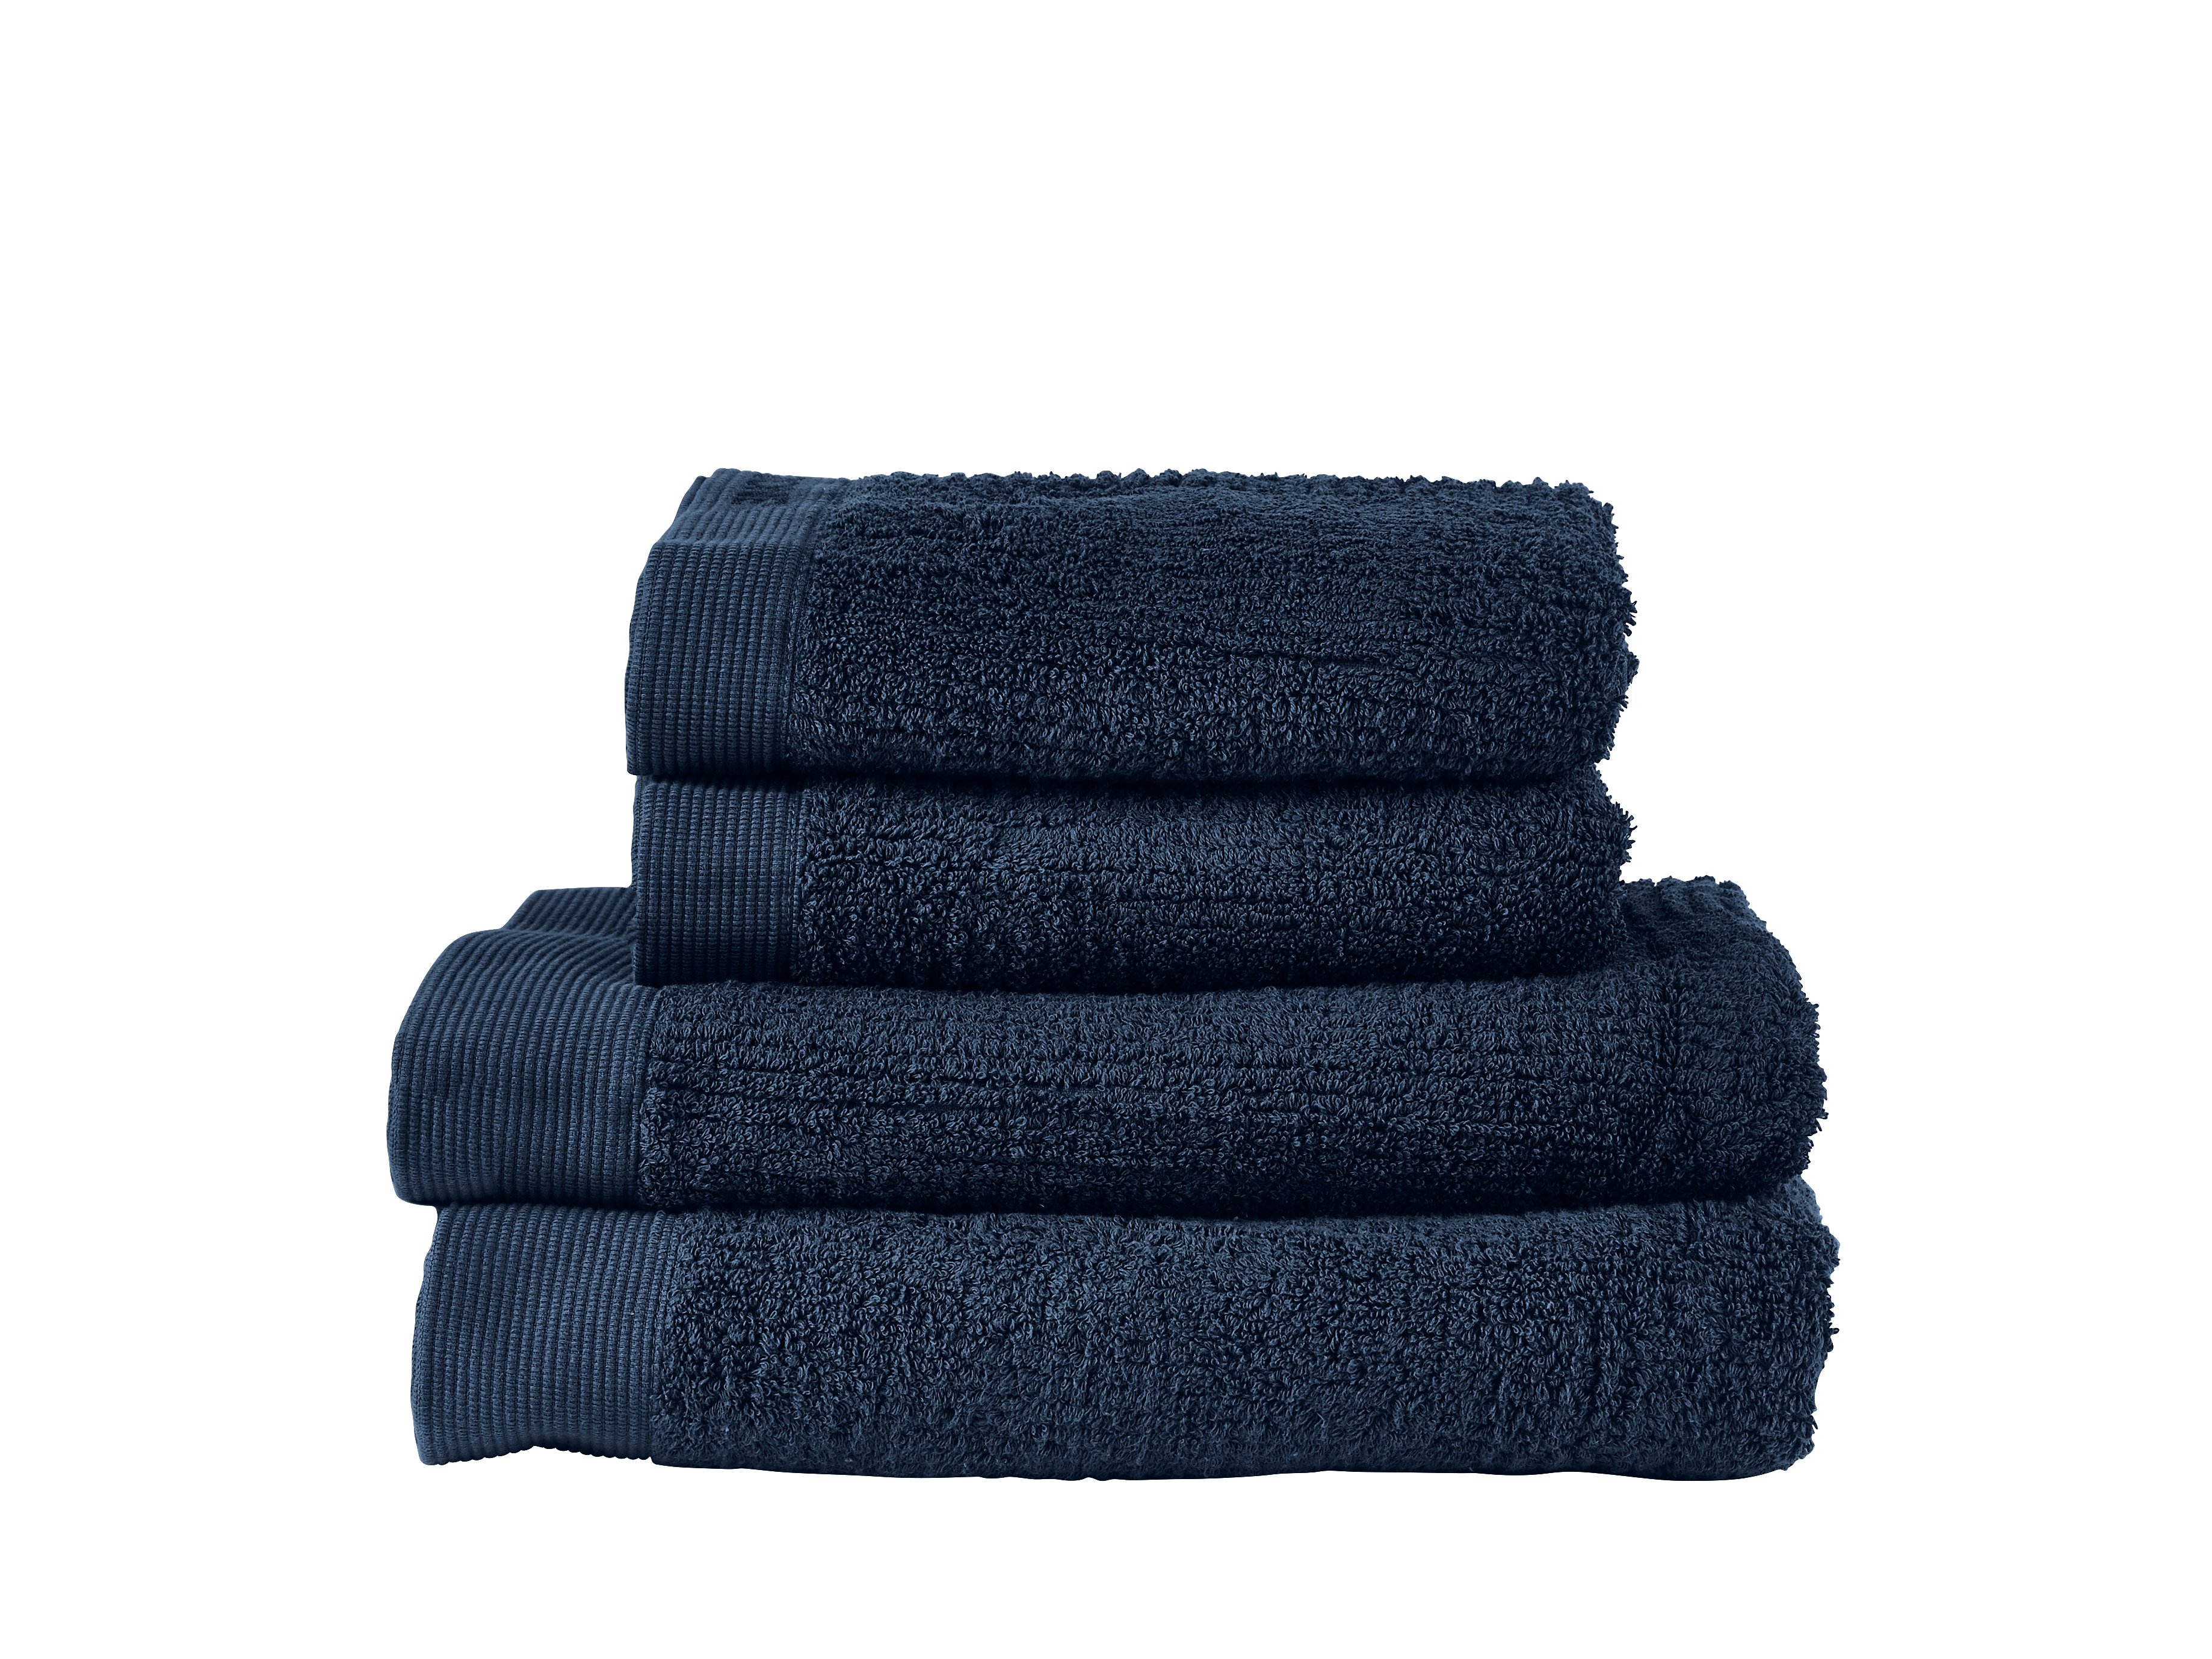 Zone Denmark - Classic Towel Set - Dark Blue (331889)